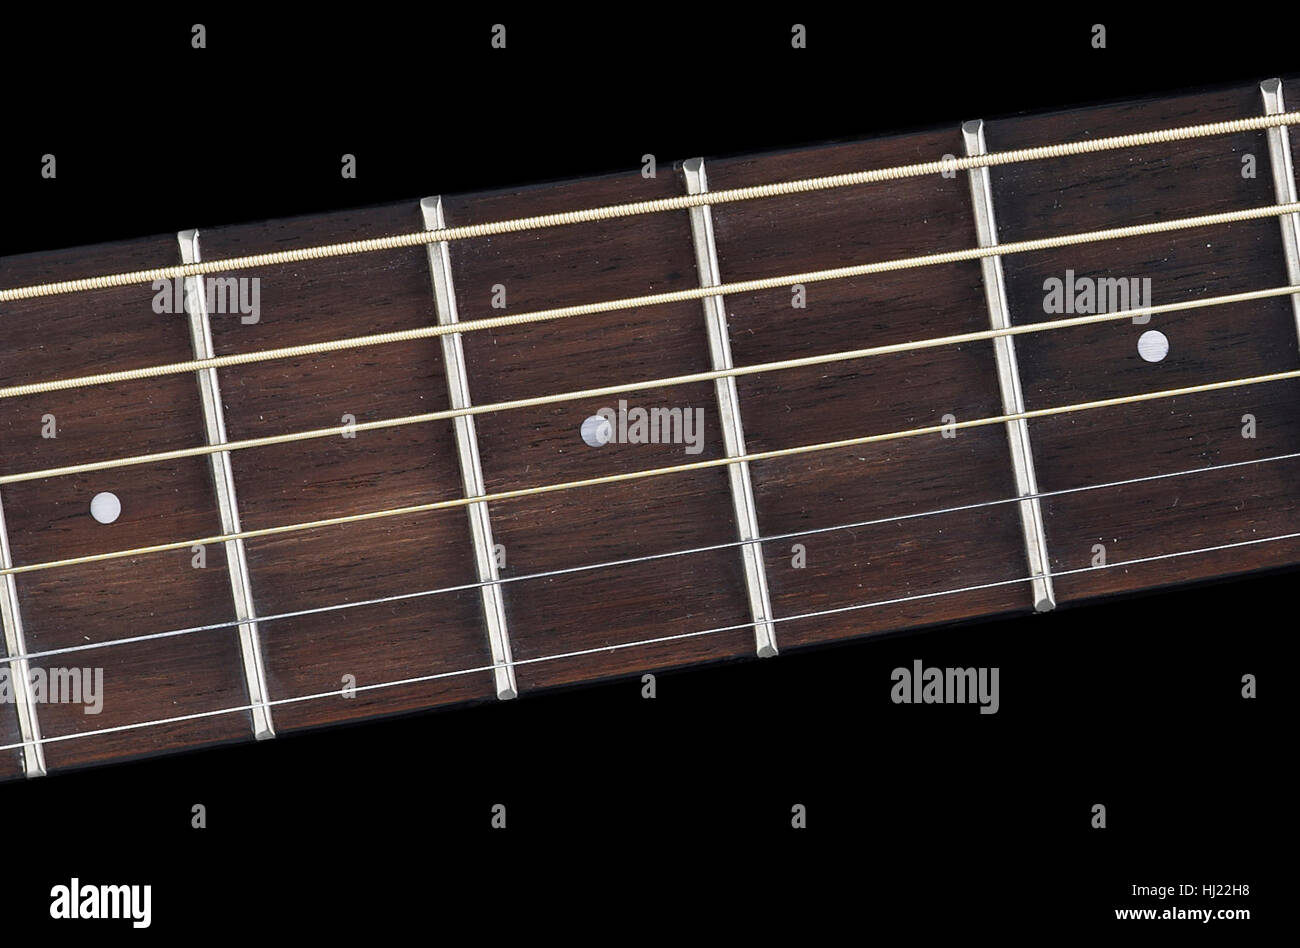 Dettaglio di una chitarra acustica in black back Foto Stock